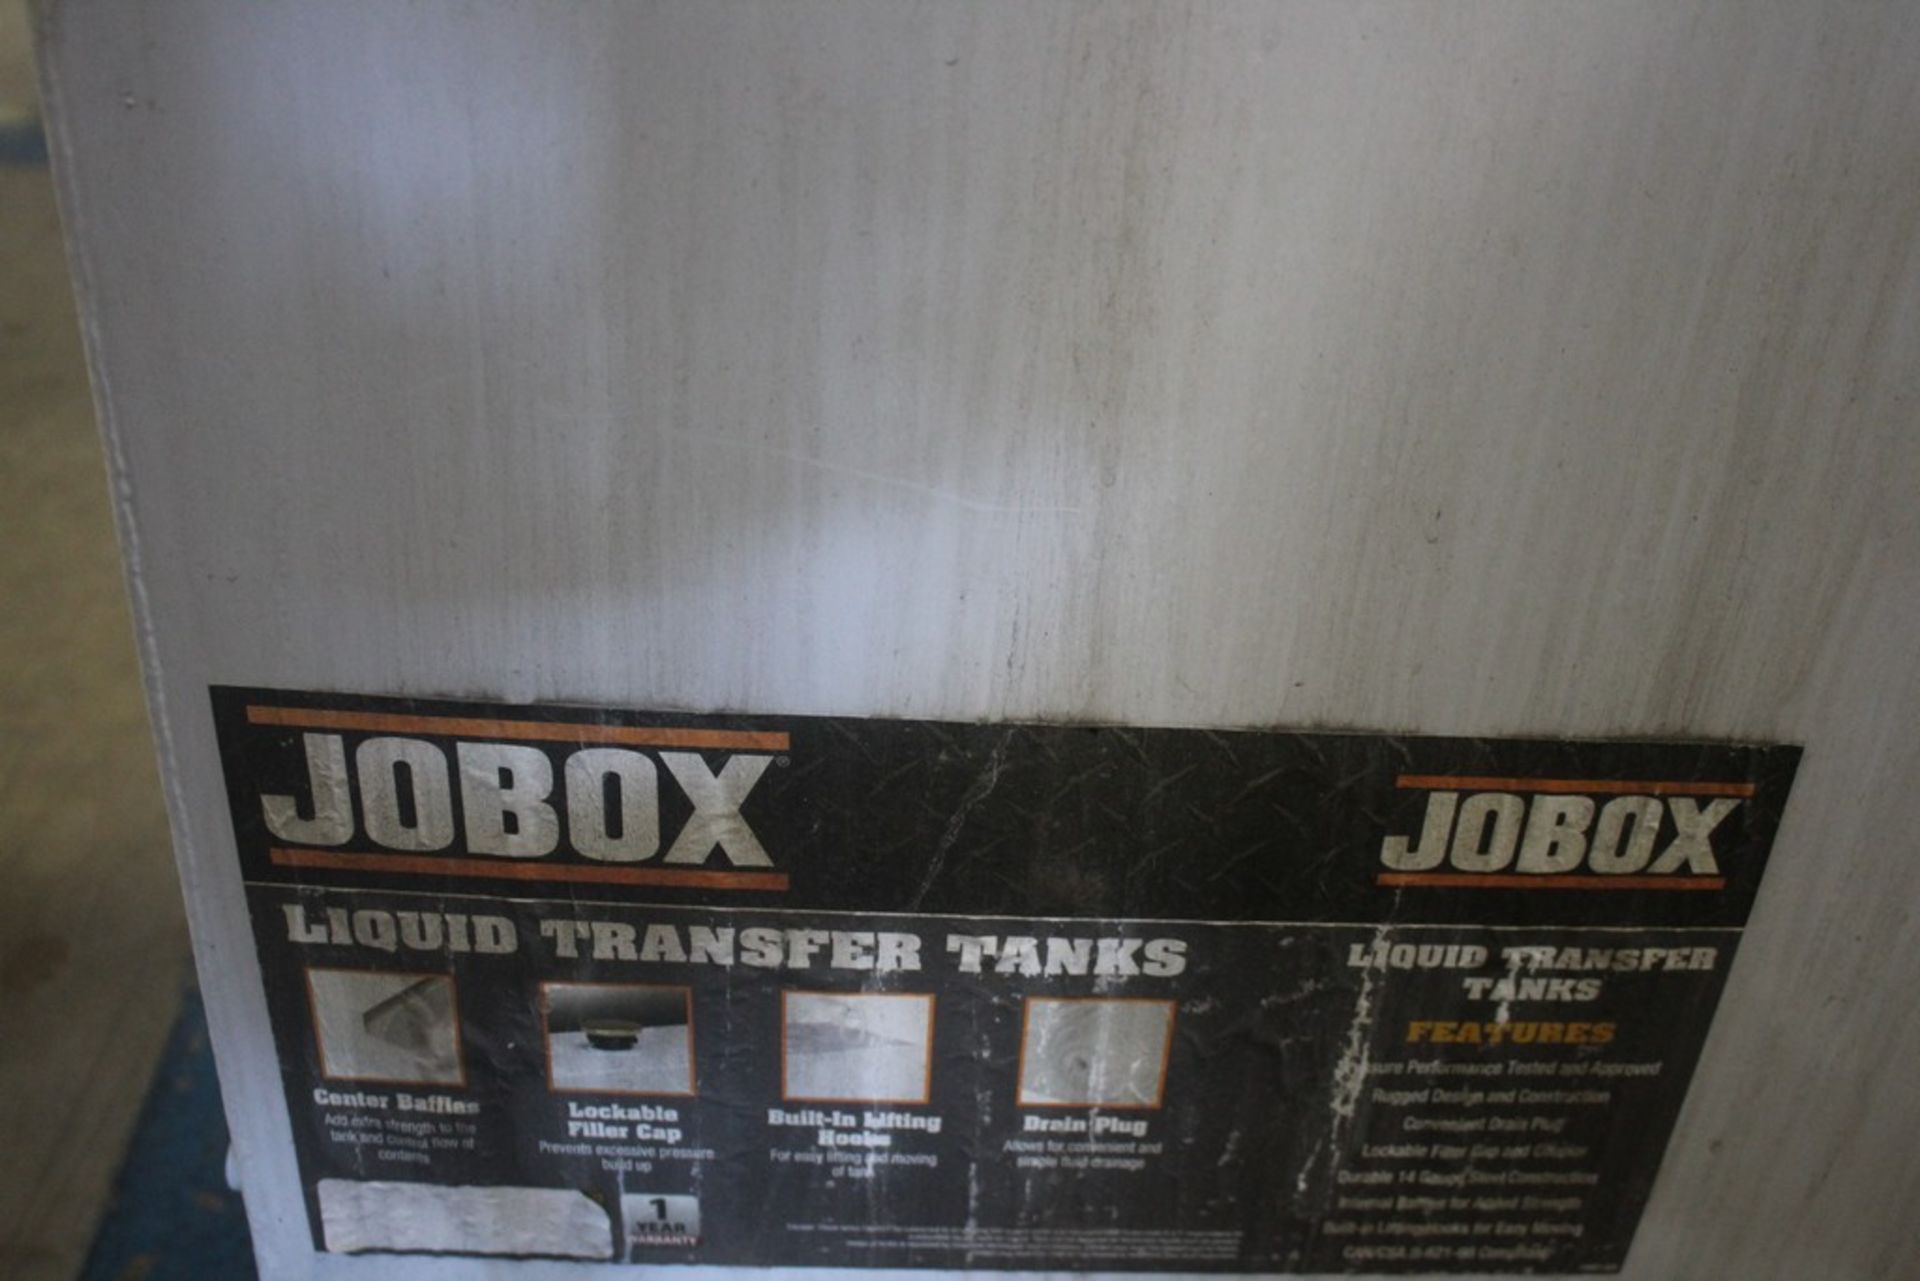 JO BOX LIQUID TRANSFER TANK MODEL 486000, 30 GALLON CAPACITY WITH HAND PUMP - Image 3 of 4